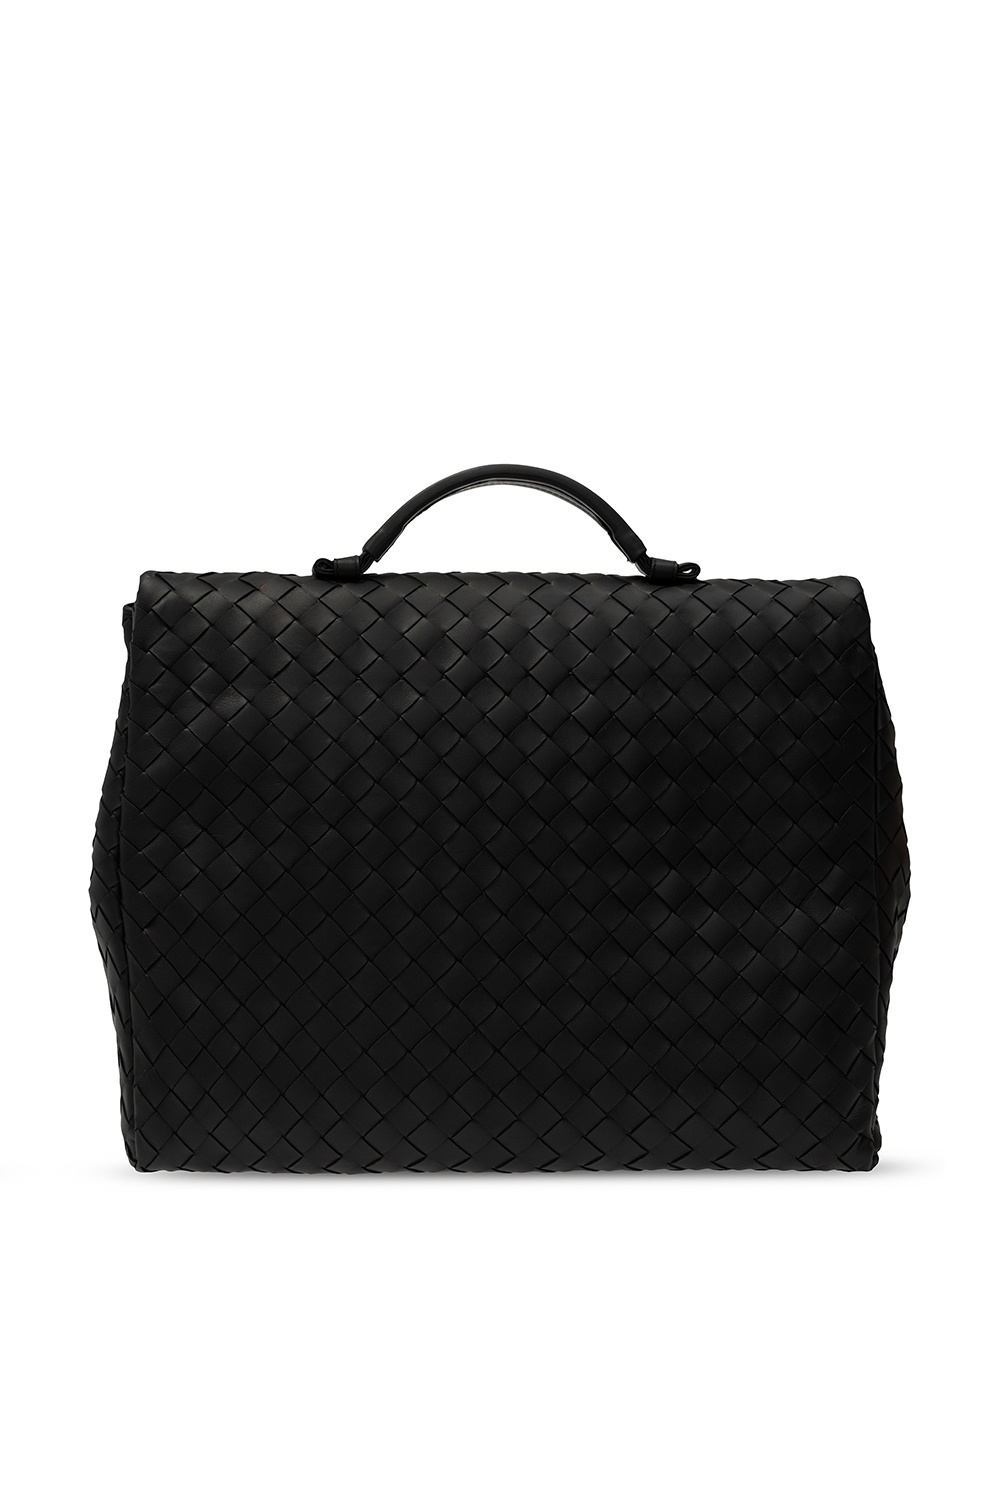 Bottega Veneta ‘Intrecciato’ weave briefcase